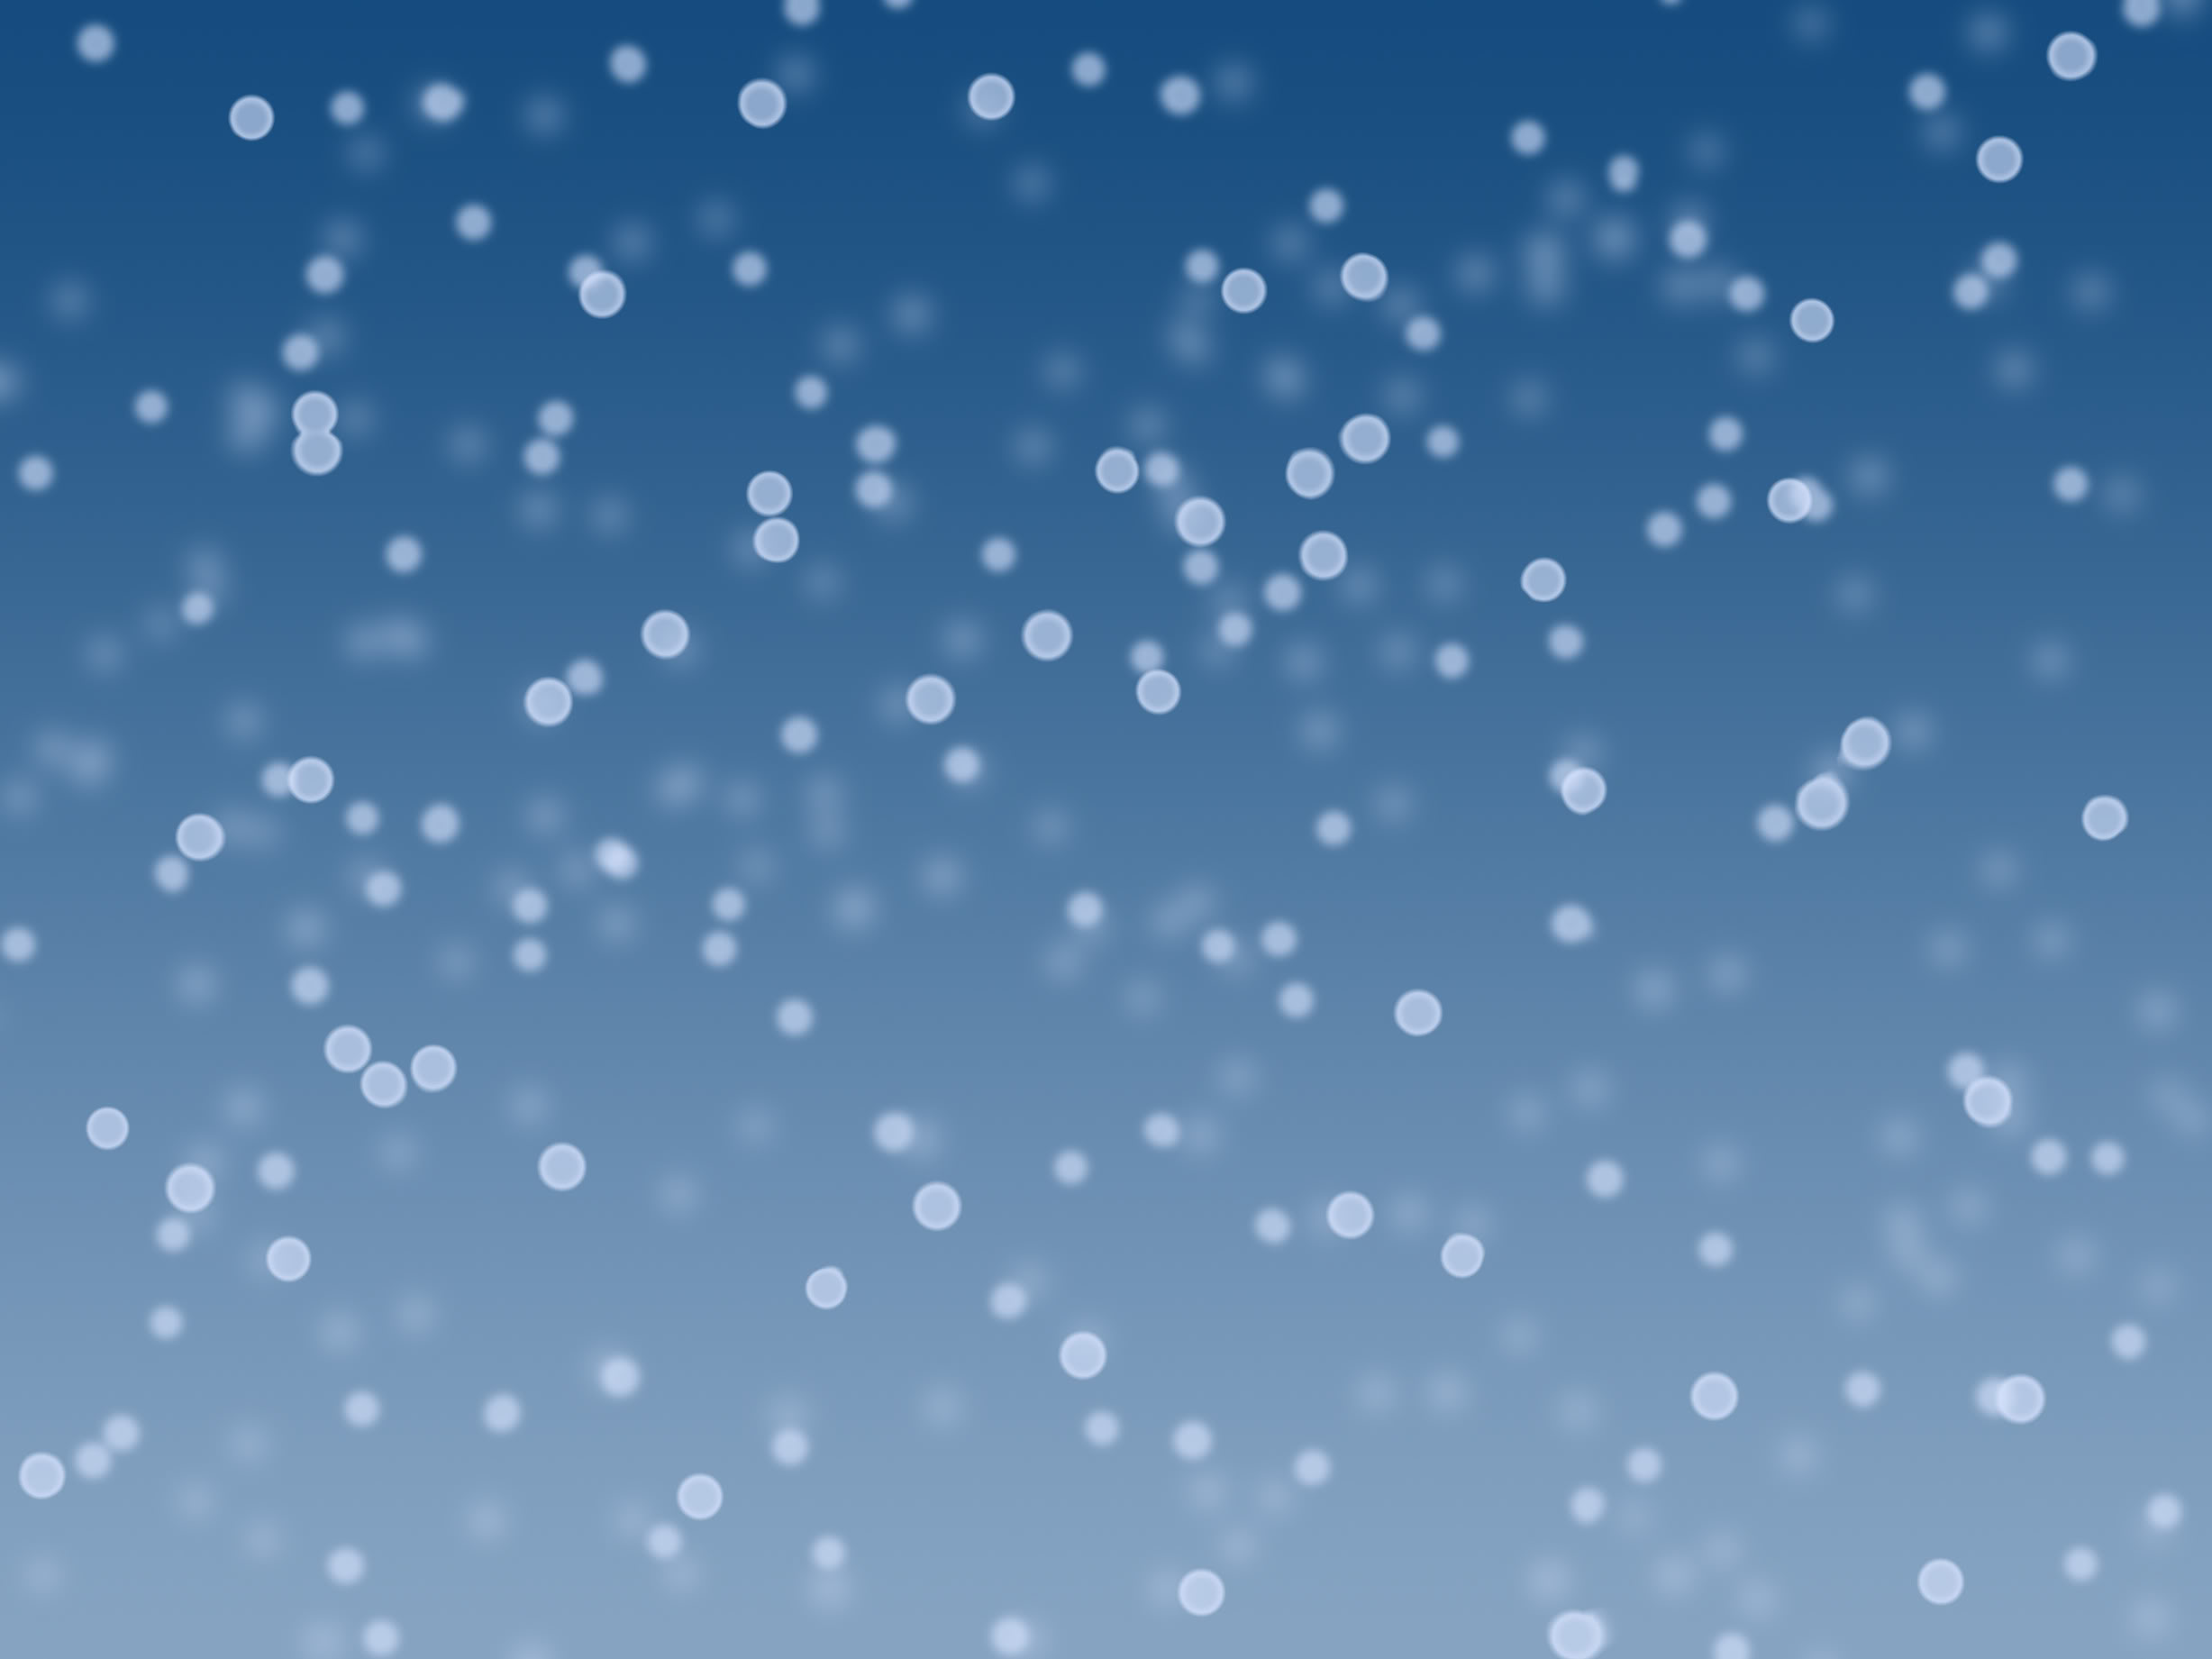 Animated Snowing Wallpaper Free - WallpaperSafari